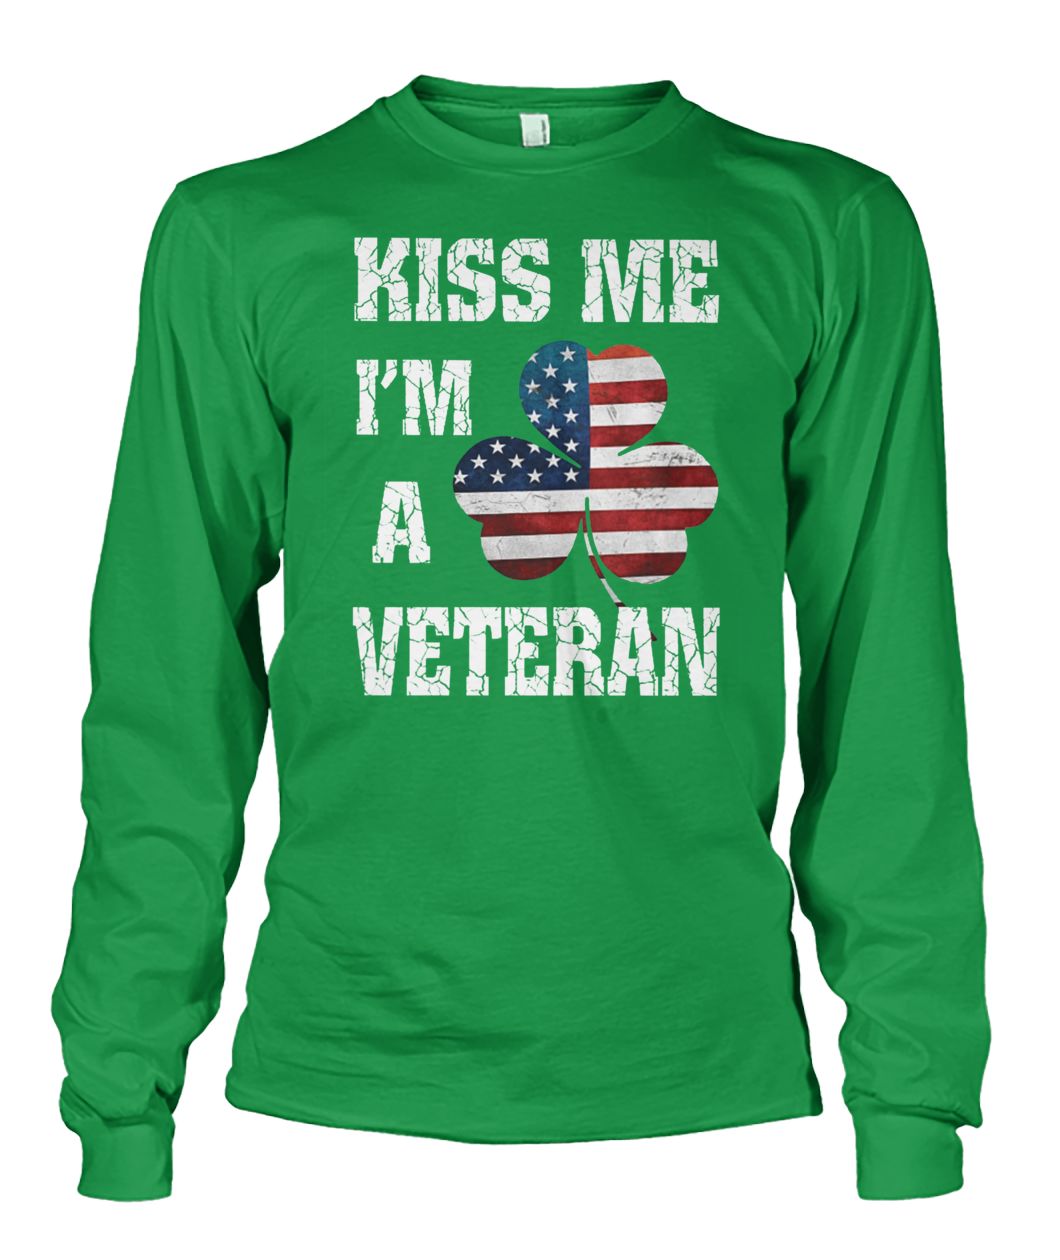 Kiss me I'm a veteran irish st patrick's day unisex long sleeve